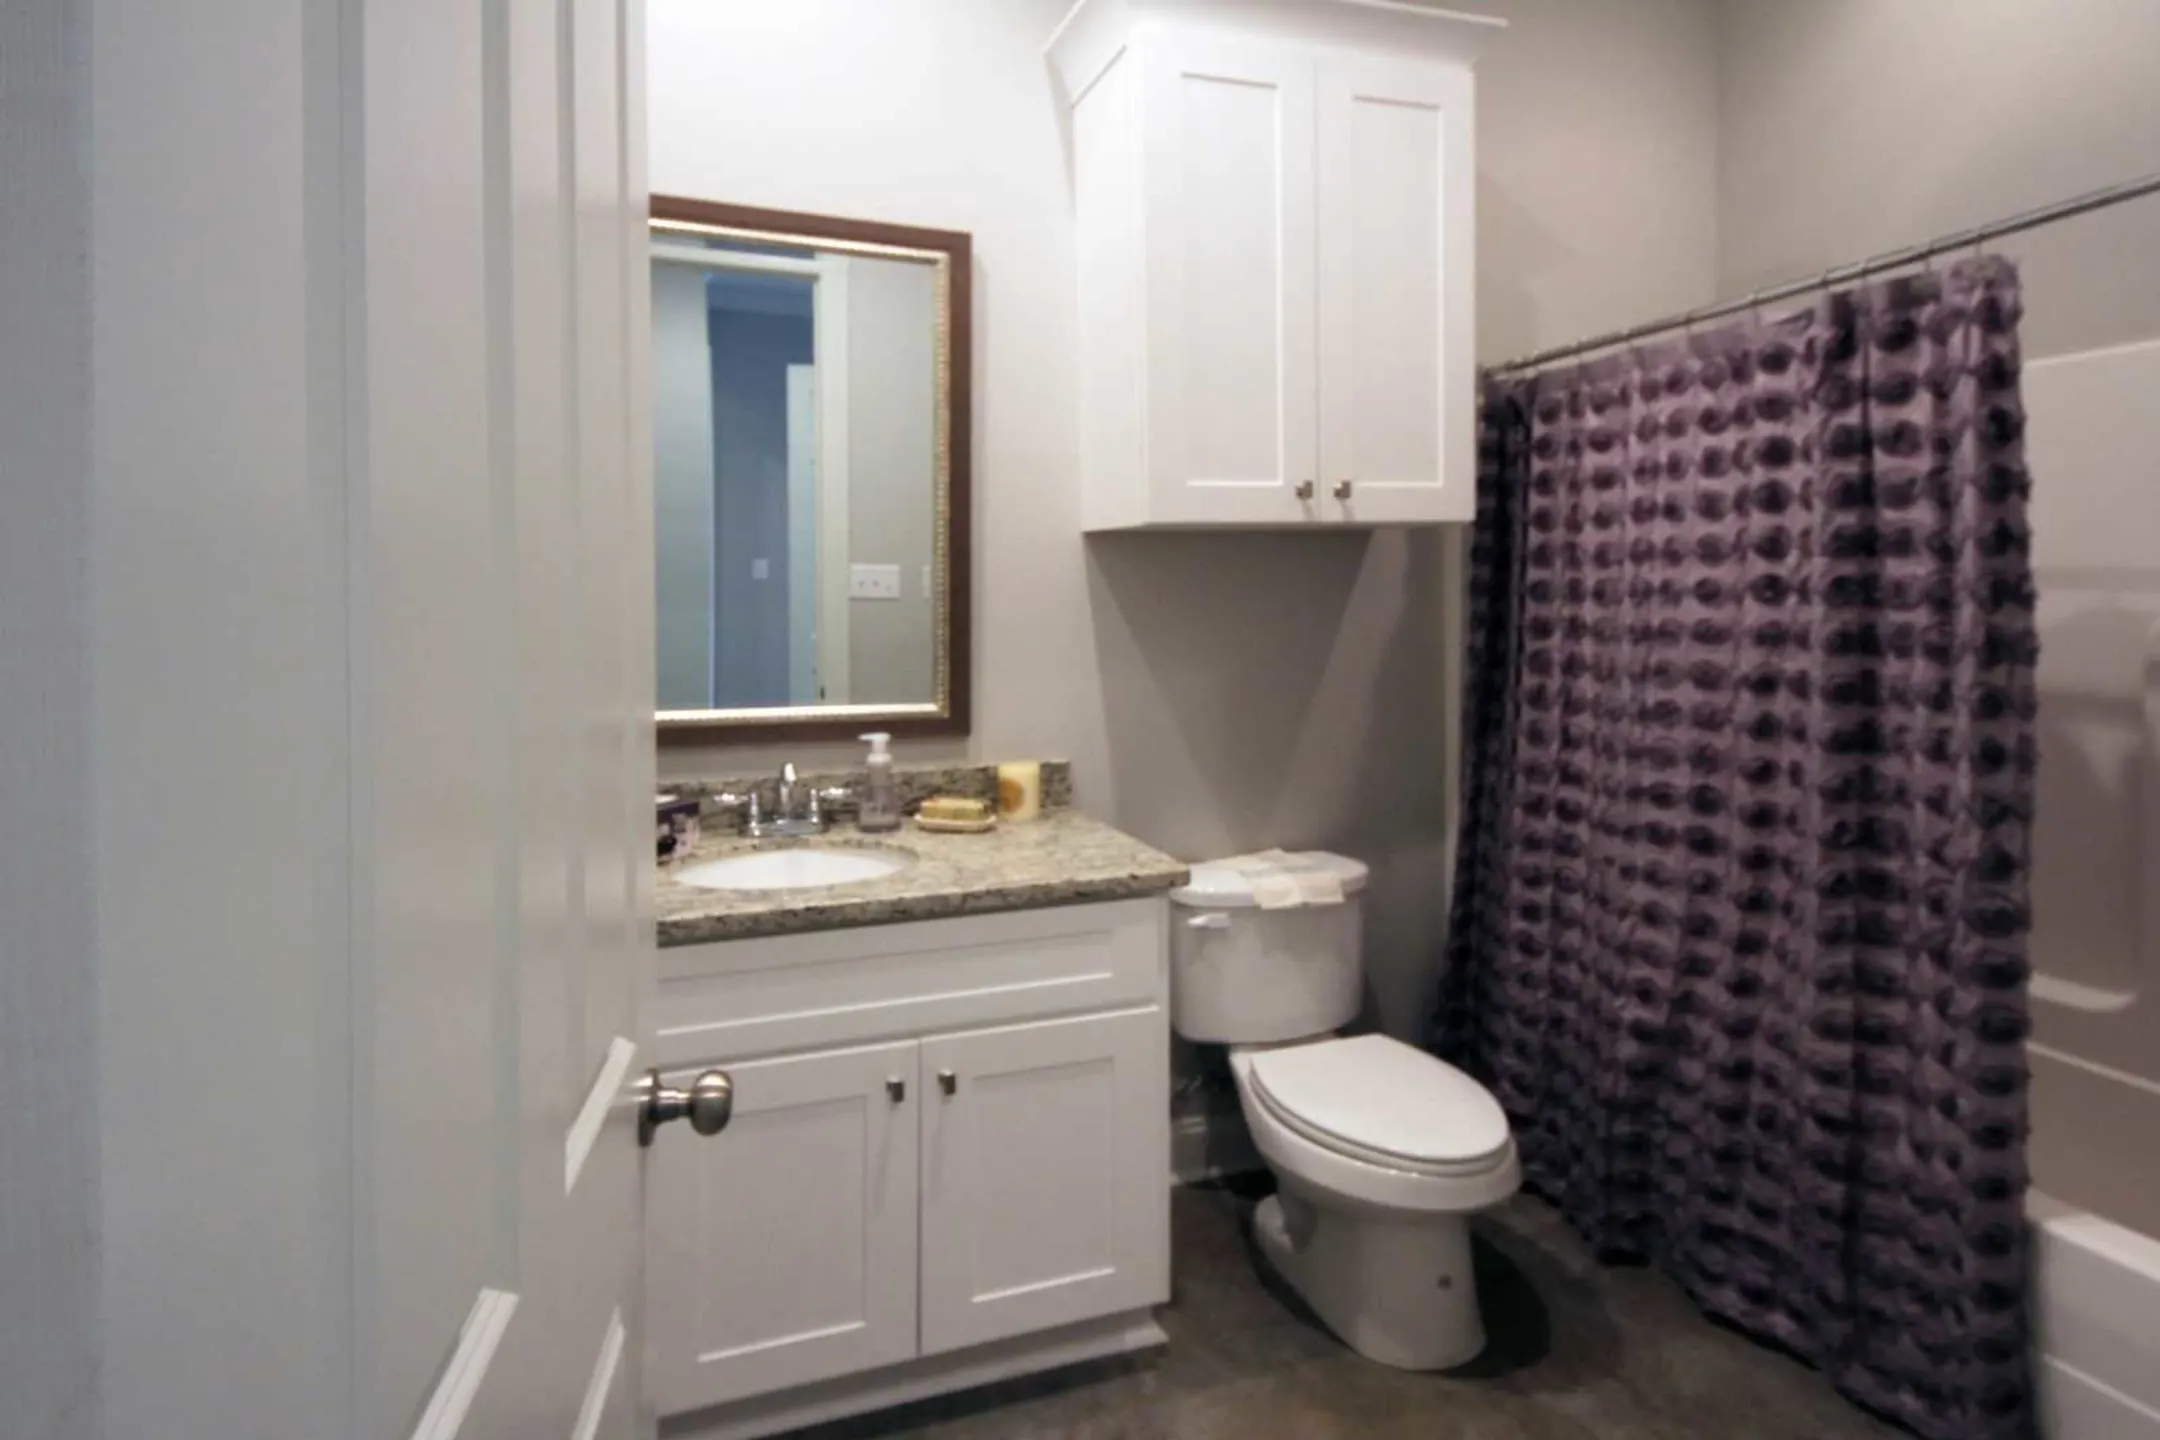 Bathroom - The Cottage at E. Broussard - Lafayette, LA